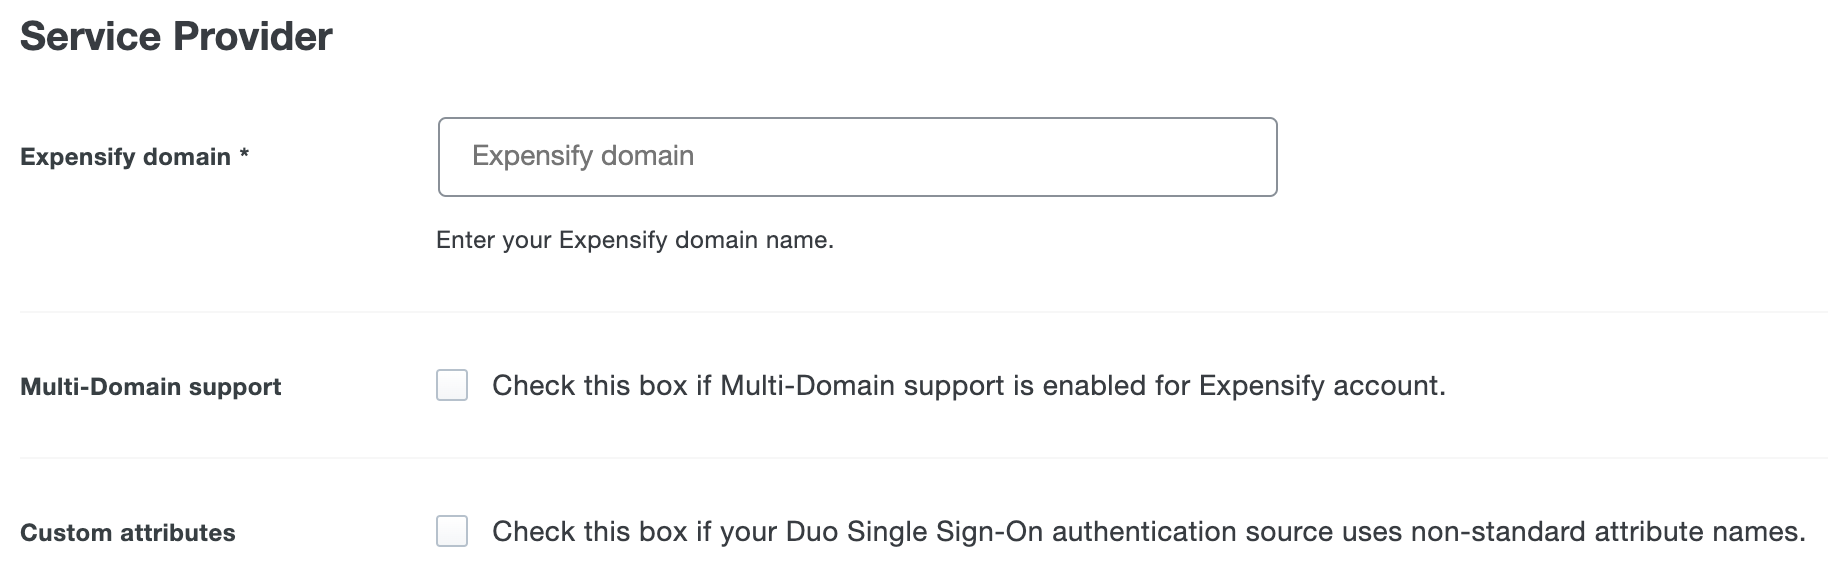 Duo Expensify Custom Attributes Checkbox